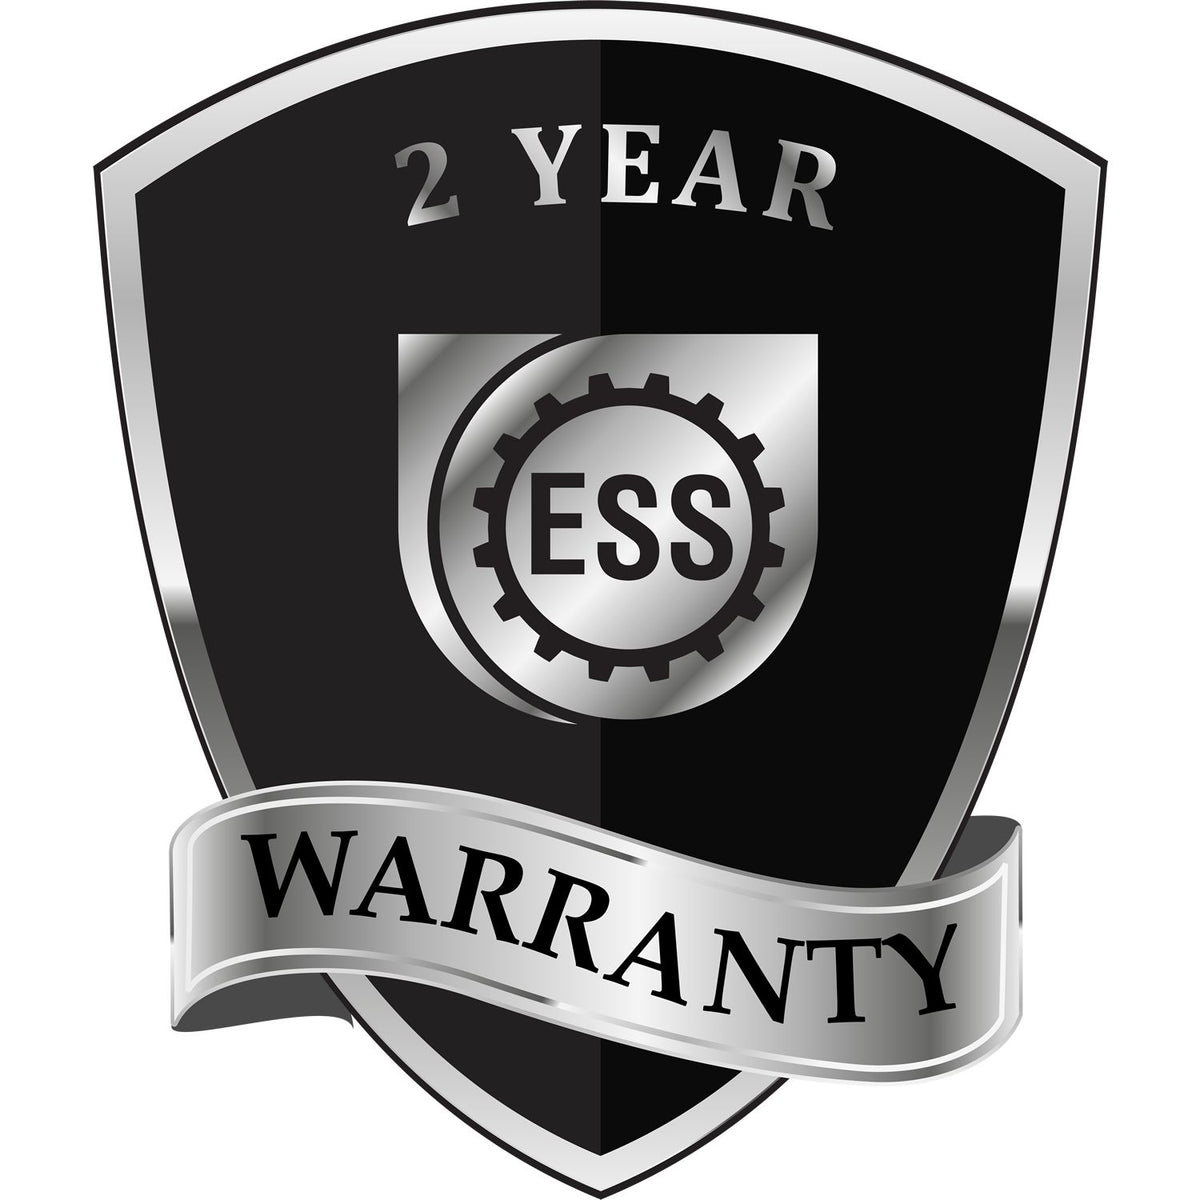 A black and silver badge or emblem showing warranty information for the Hybrid Pennsylvania Land Surveyor Seal